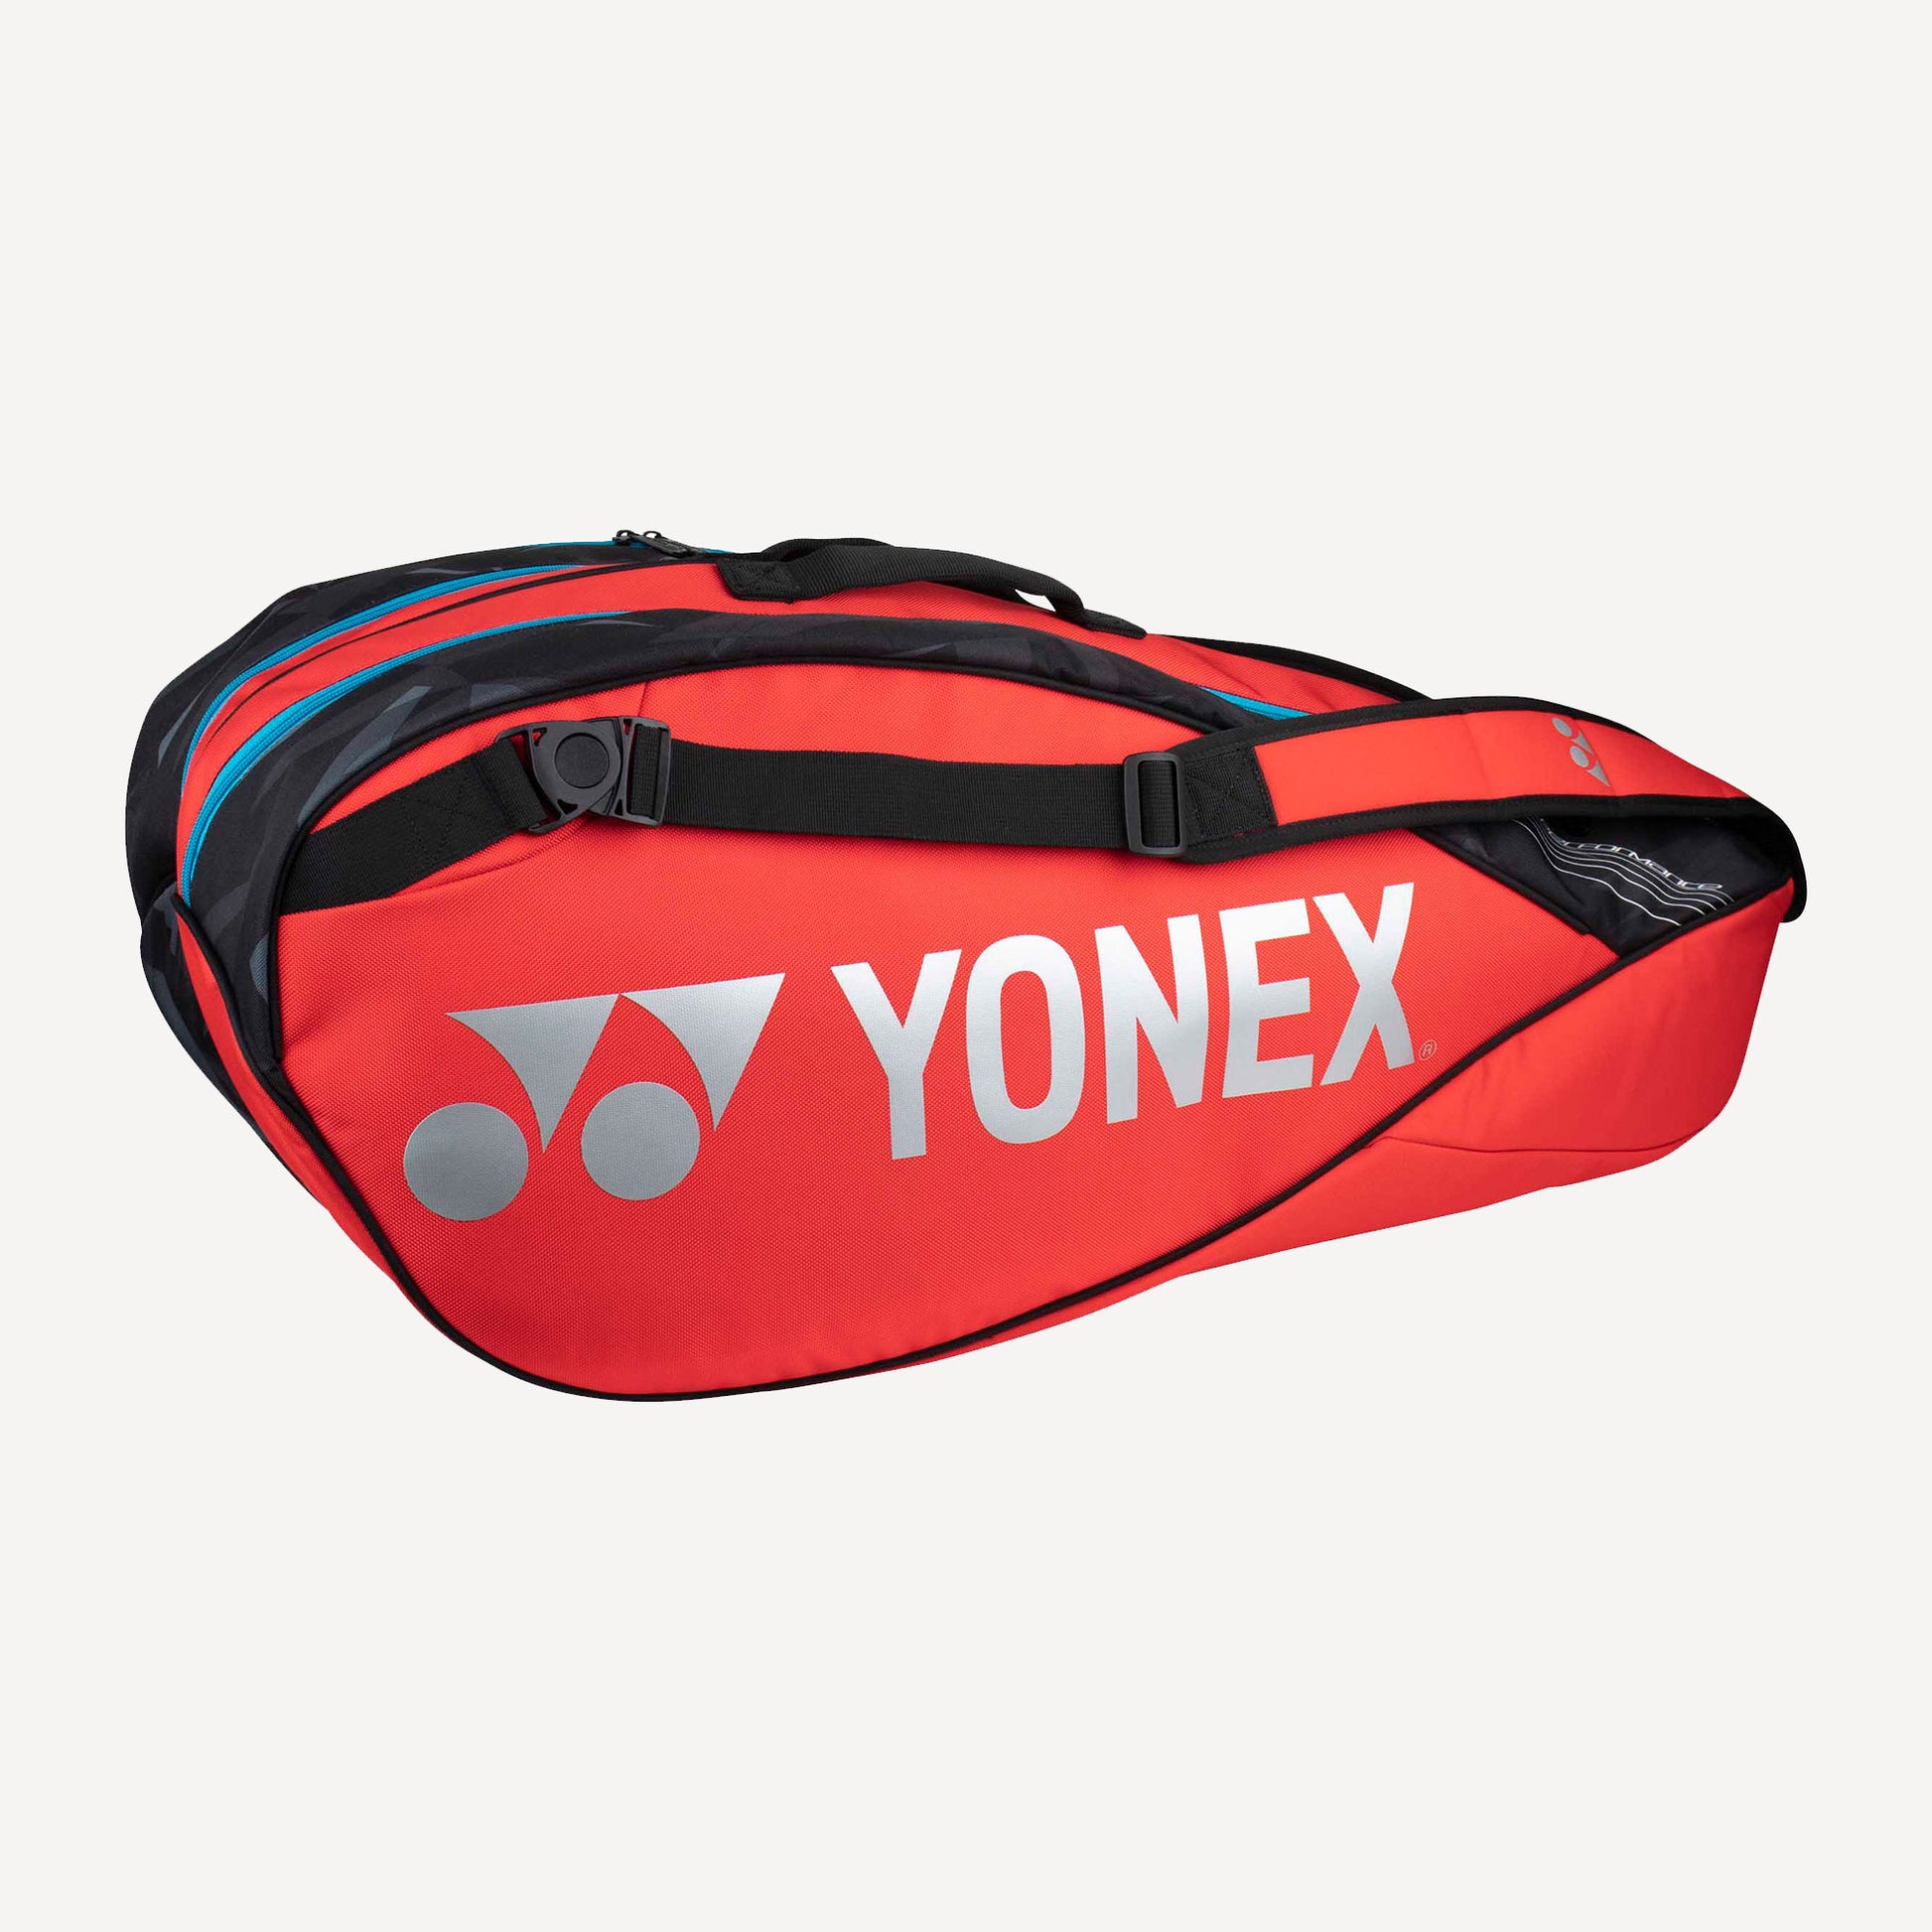 Yonex Pro 6R Tennis Bag Red (2)